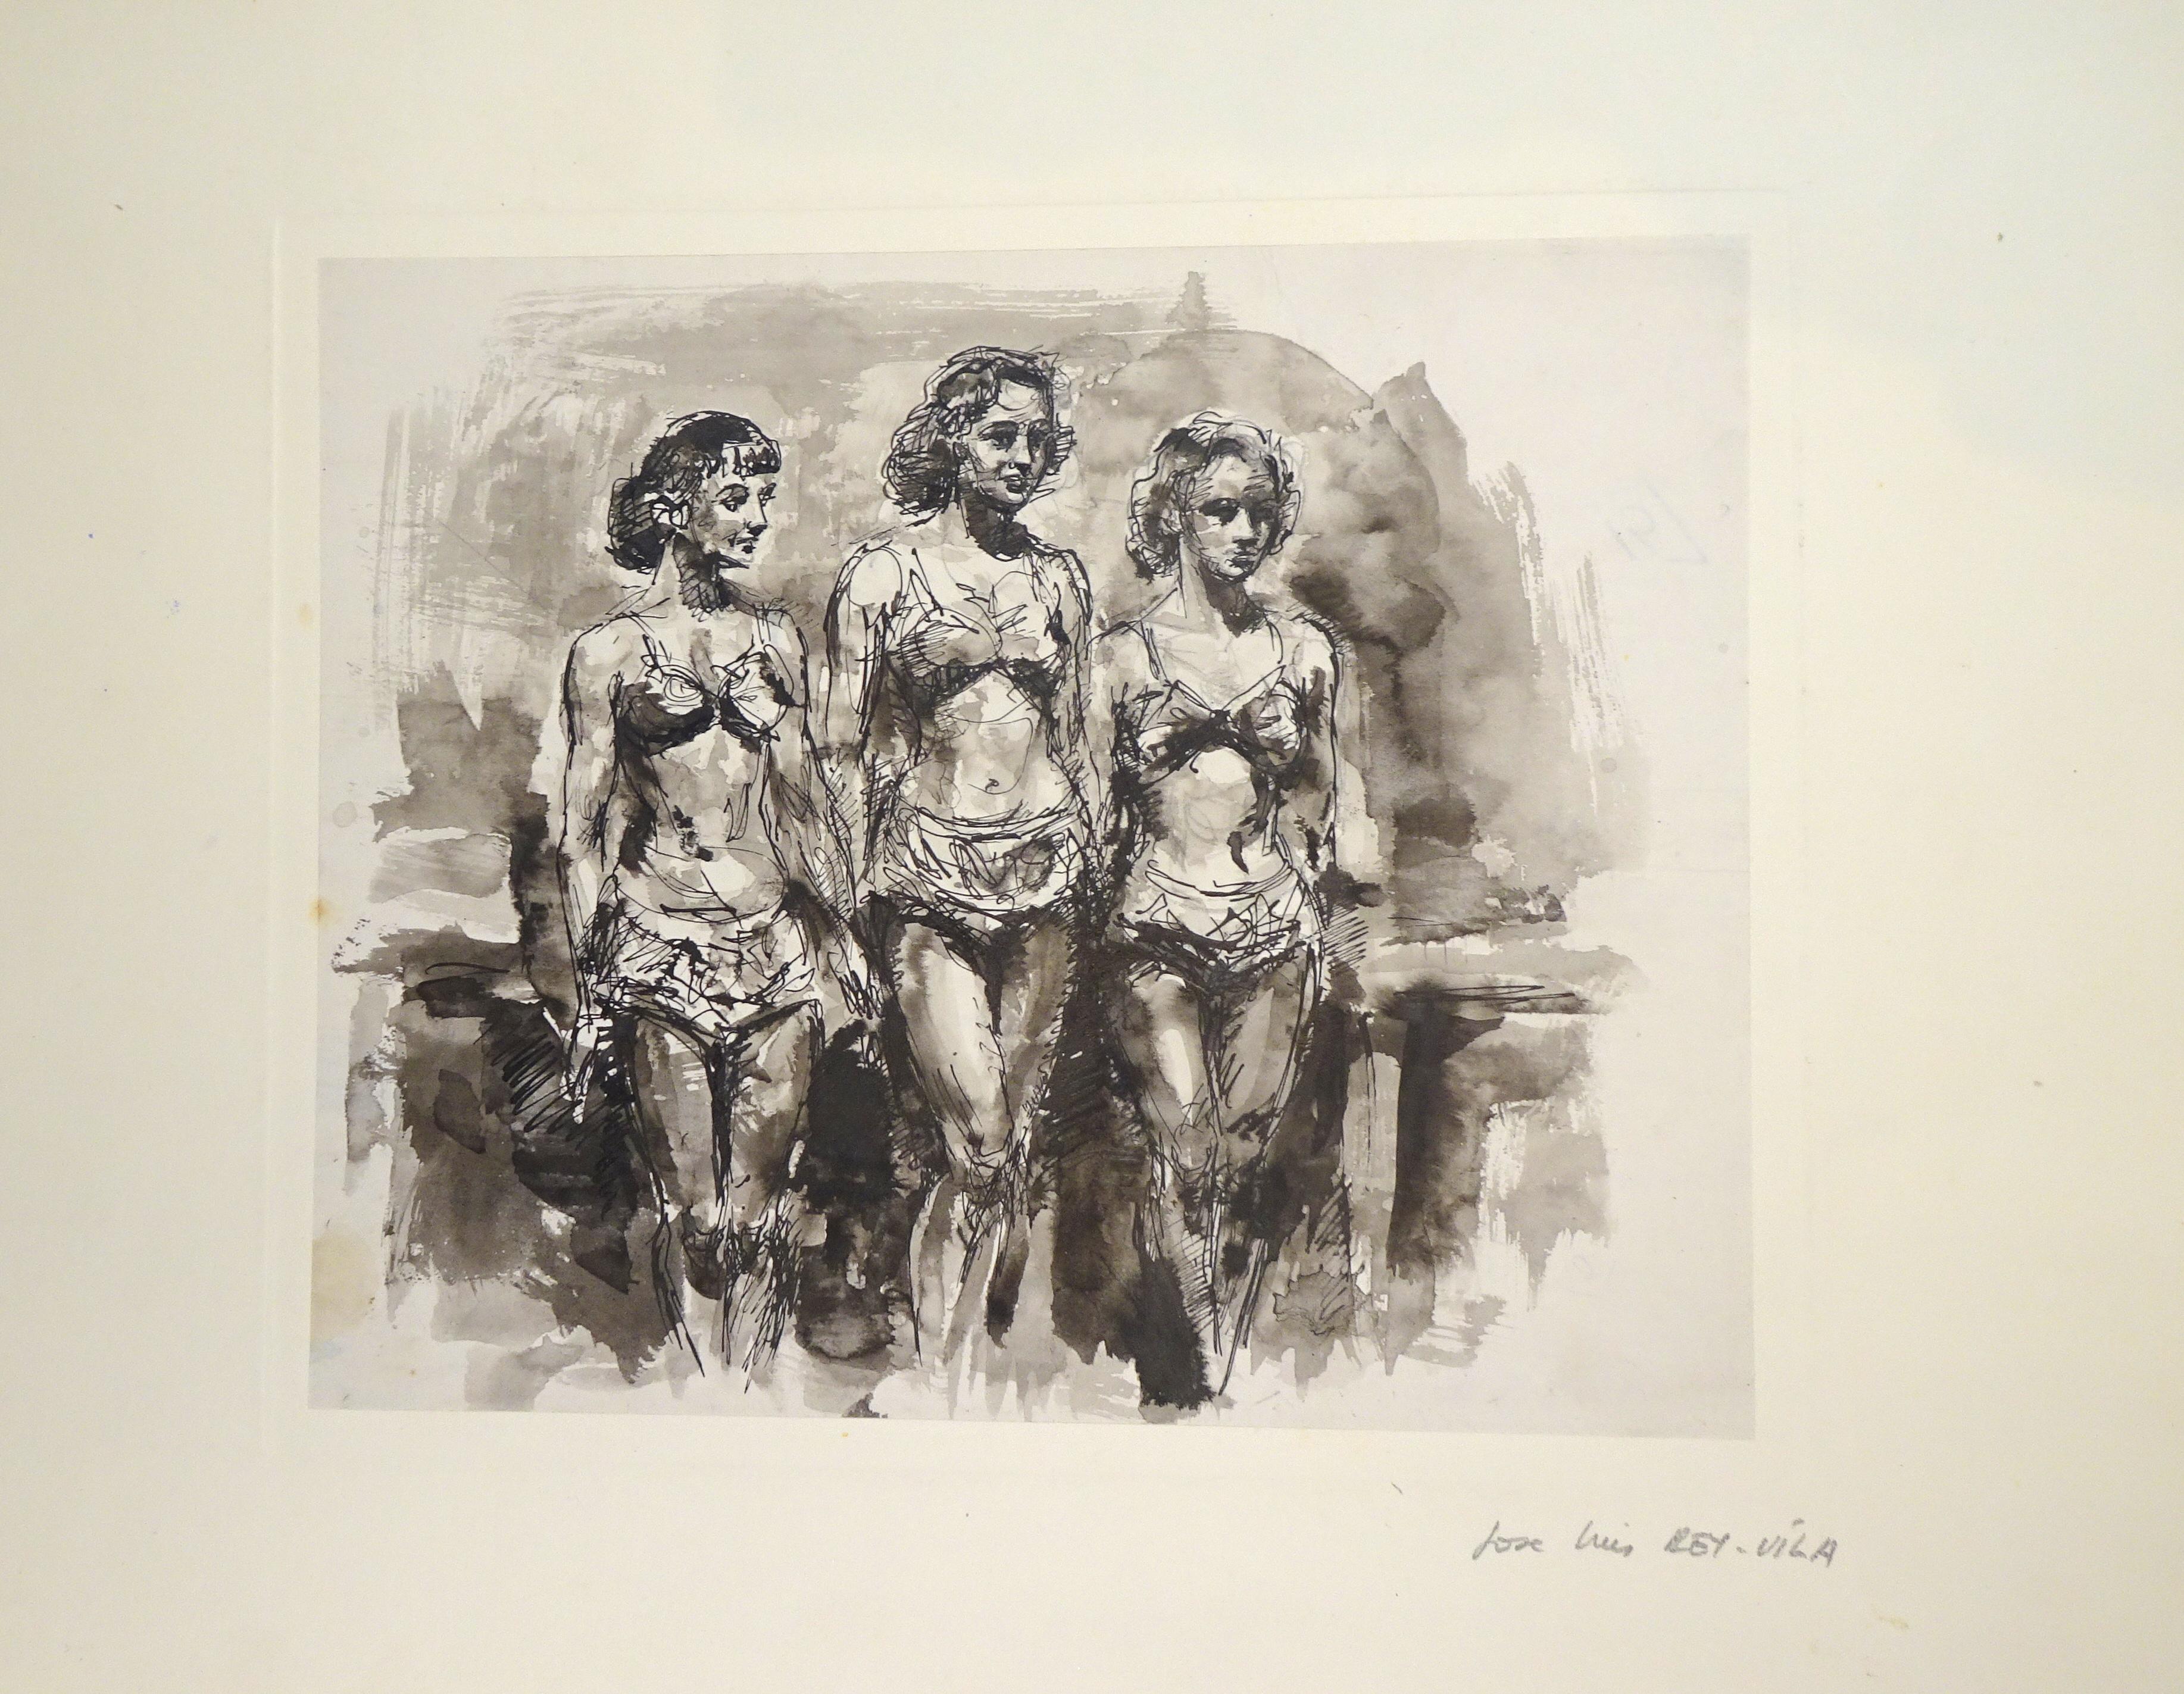 Women - Original China Ink and Watercolor by J.L. Rey Vila - 1950s - Mixed Media Art by José Luis Rey Vila